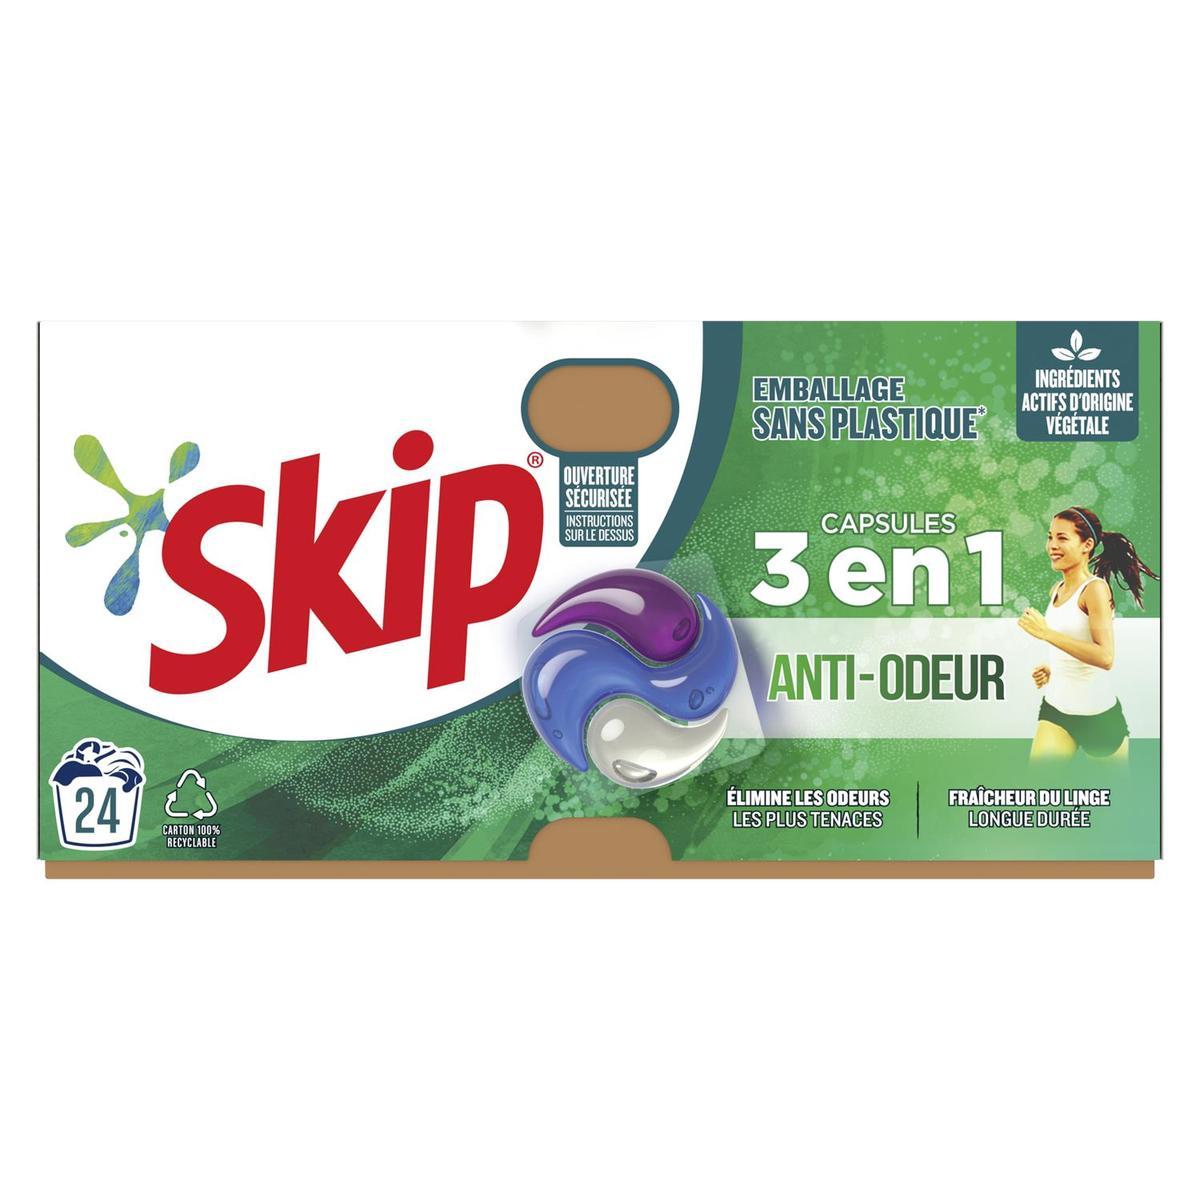 Skip Ultimate Active Clean - Emballage cartonné